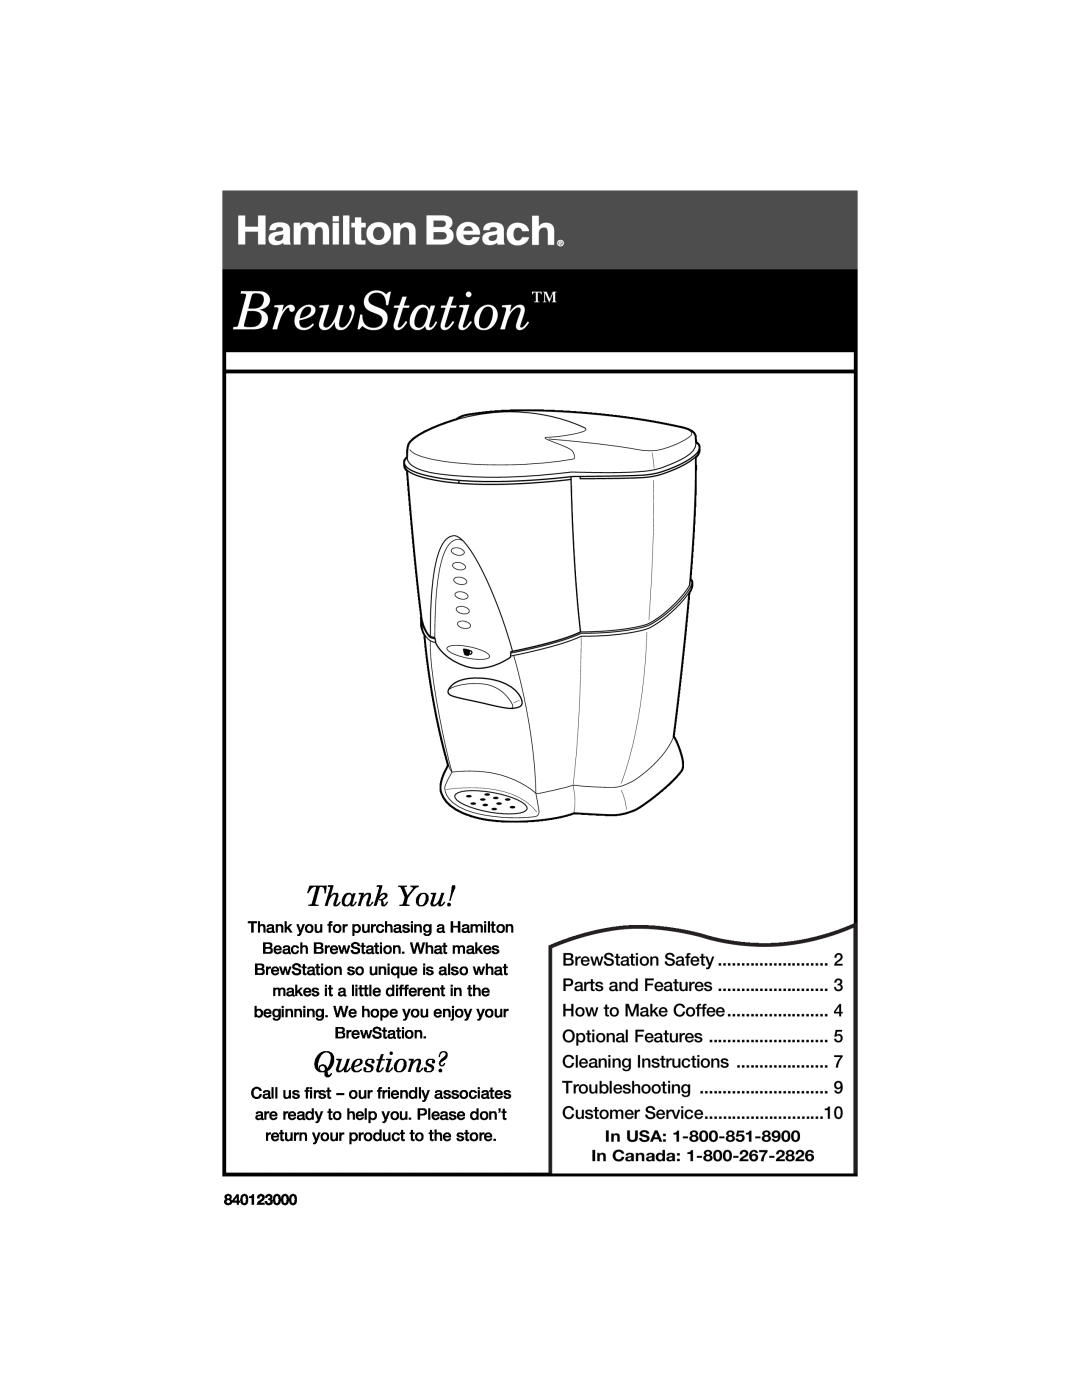 Hamilton Beach BrewStation manual Thank You, Questions?, In USA In Canada 